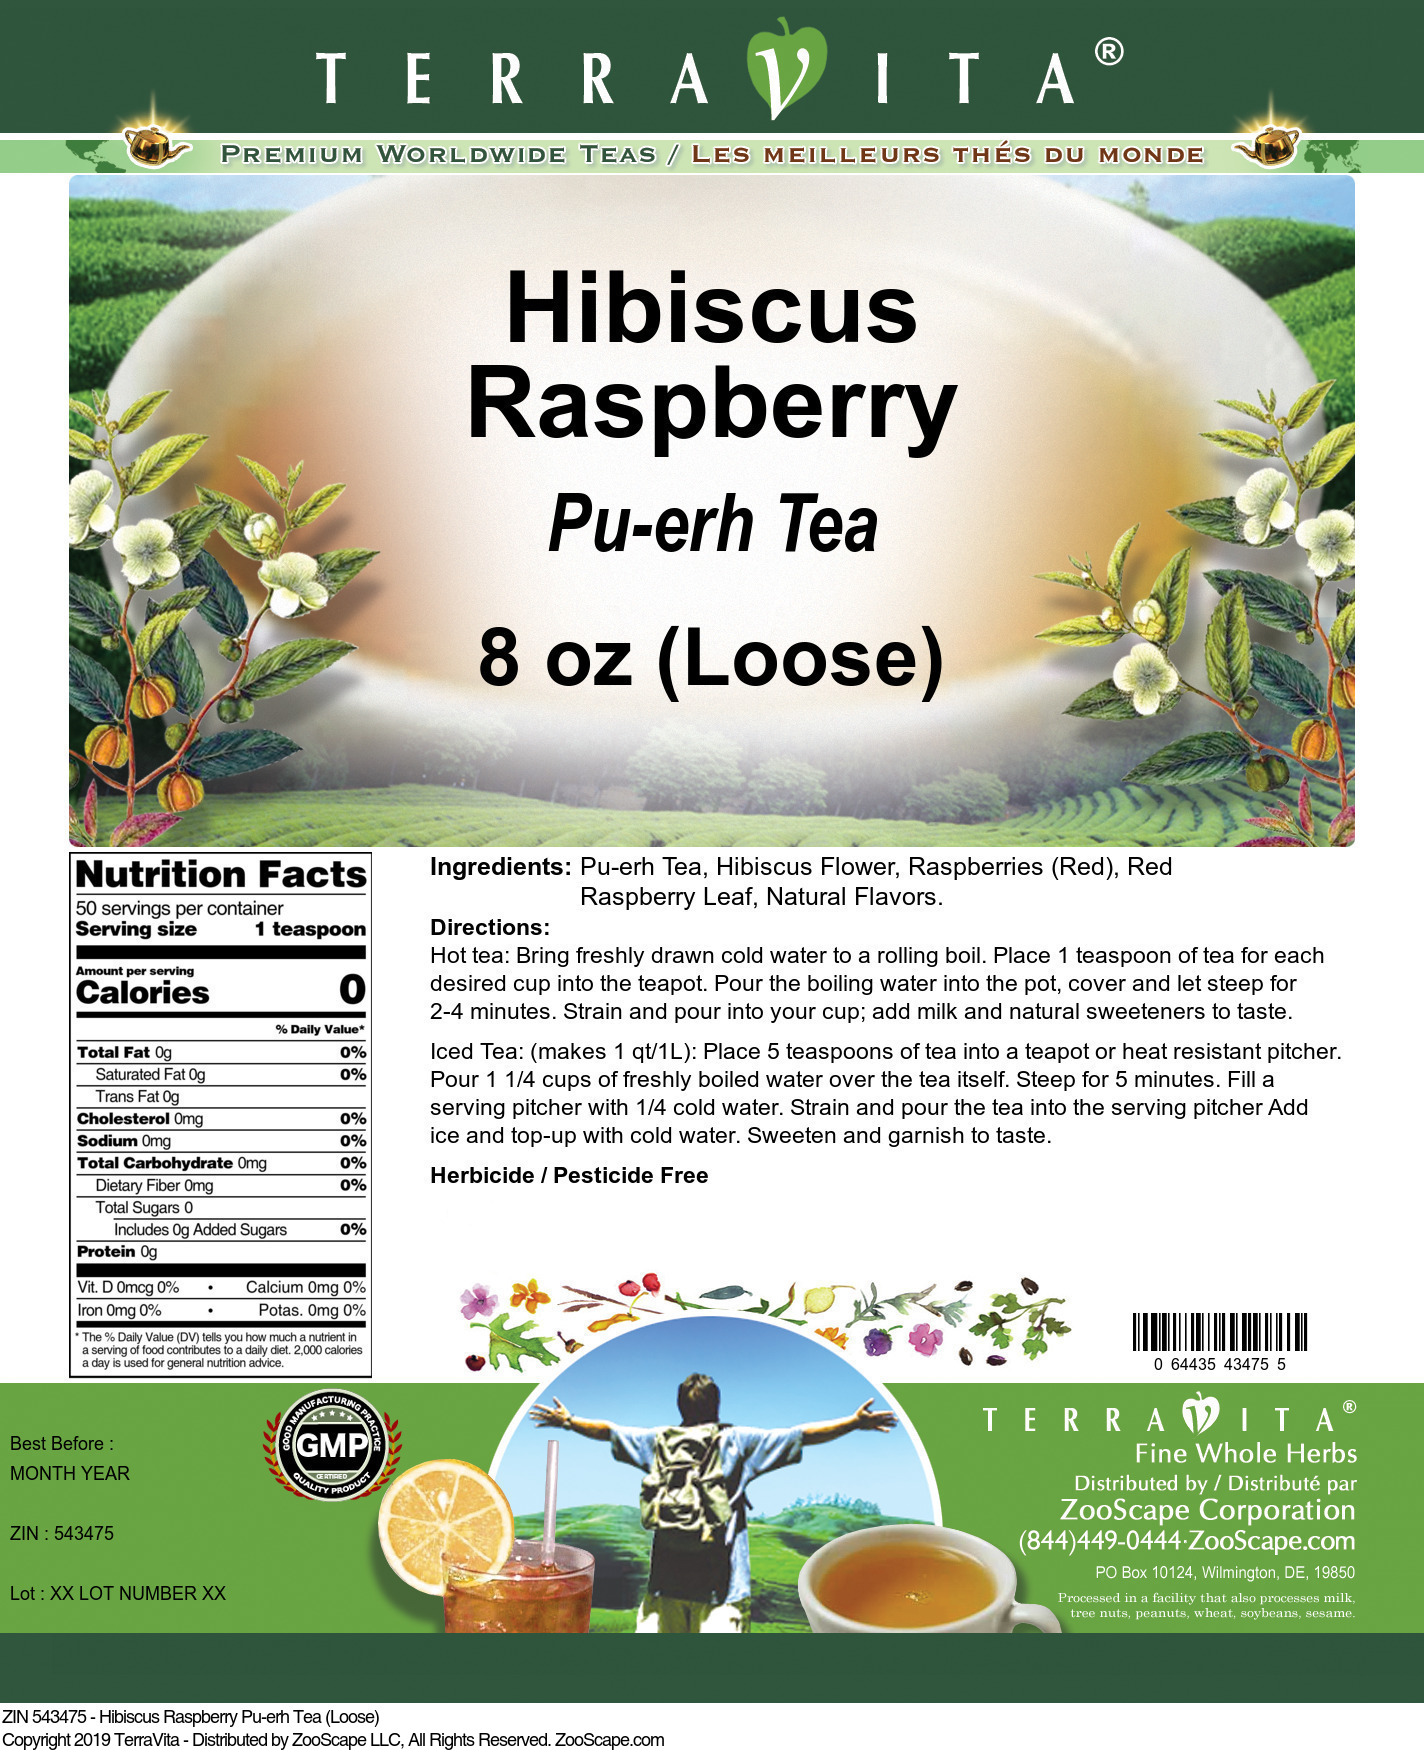 Hibiscus Raspberry Pu-erh Tea (Loose) - Label